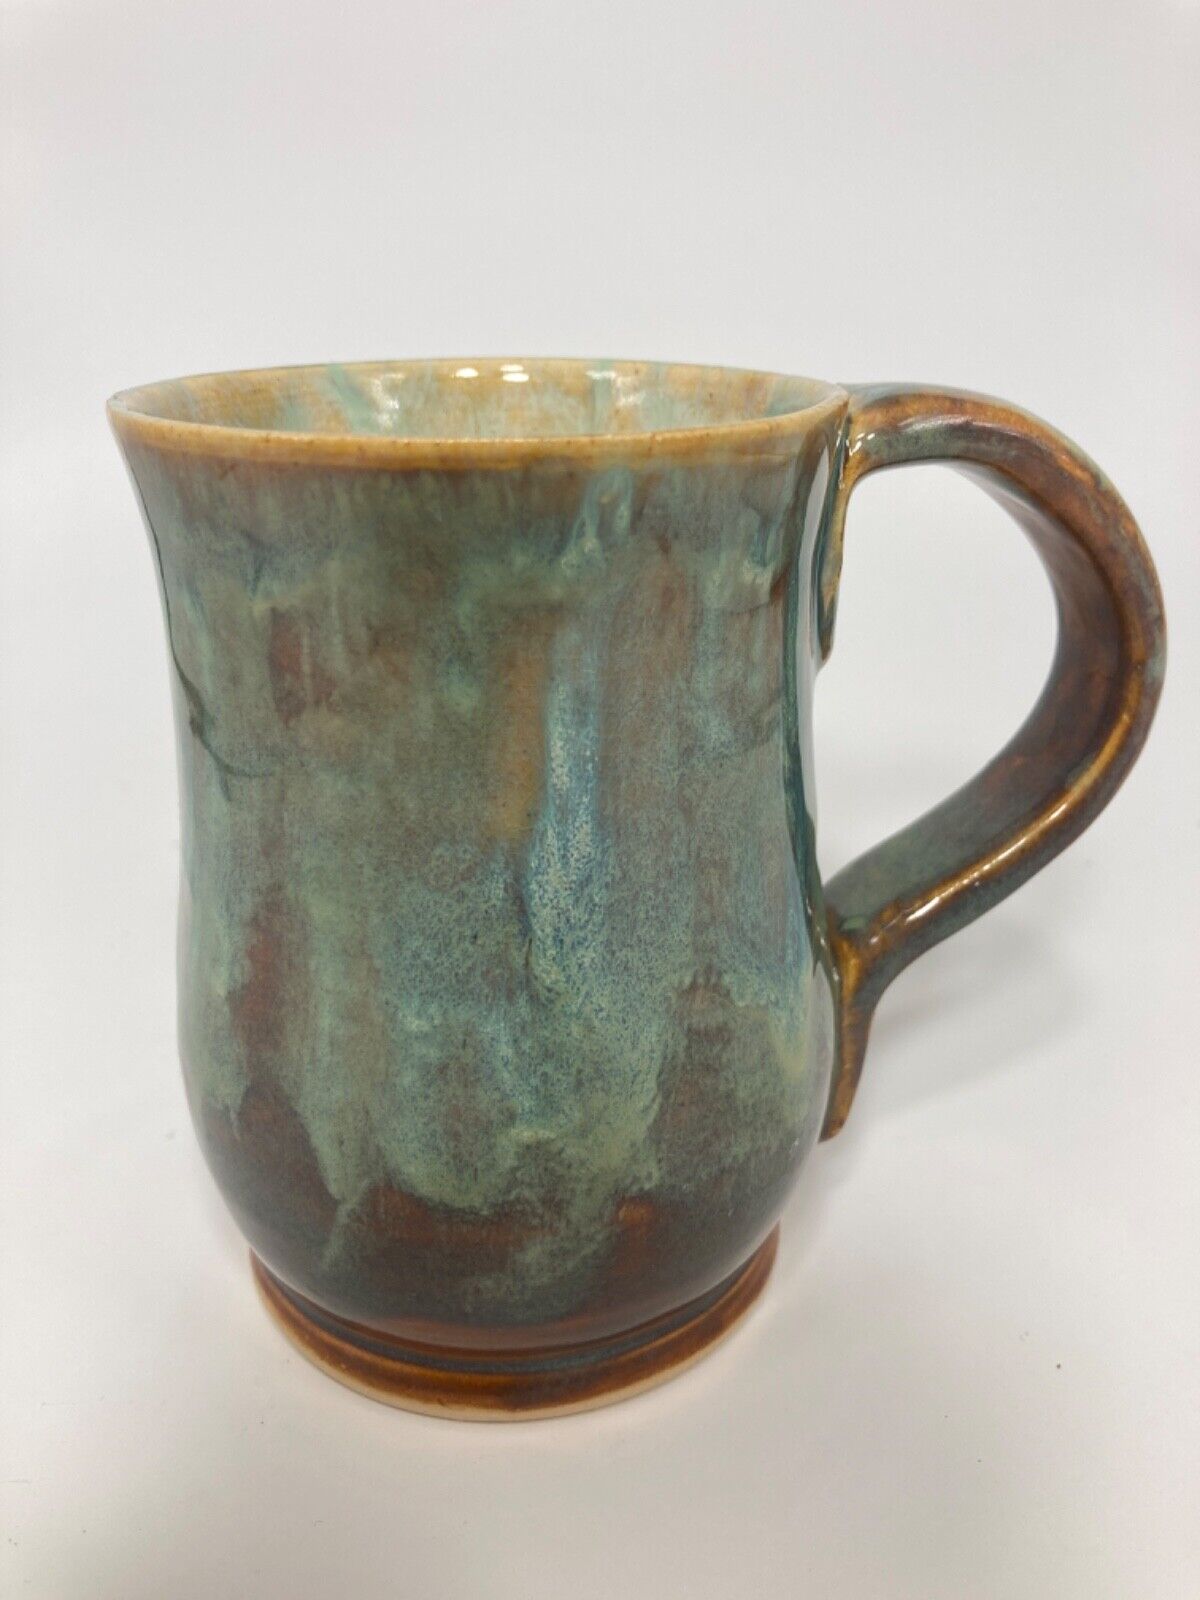 Art studio pottery mug, Gailanna Pottery, signed, brown teal drip glaze 12oz.